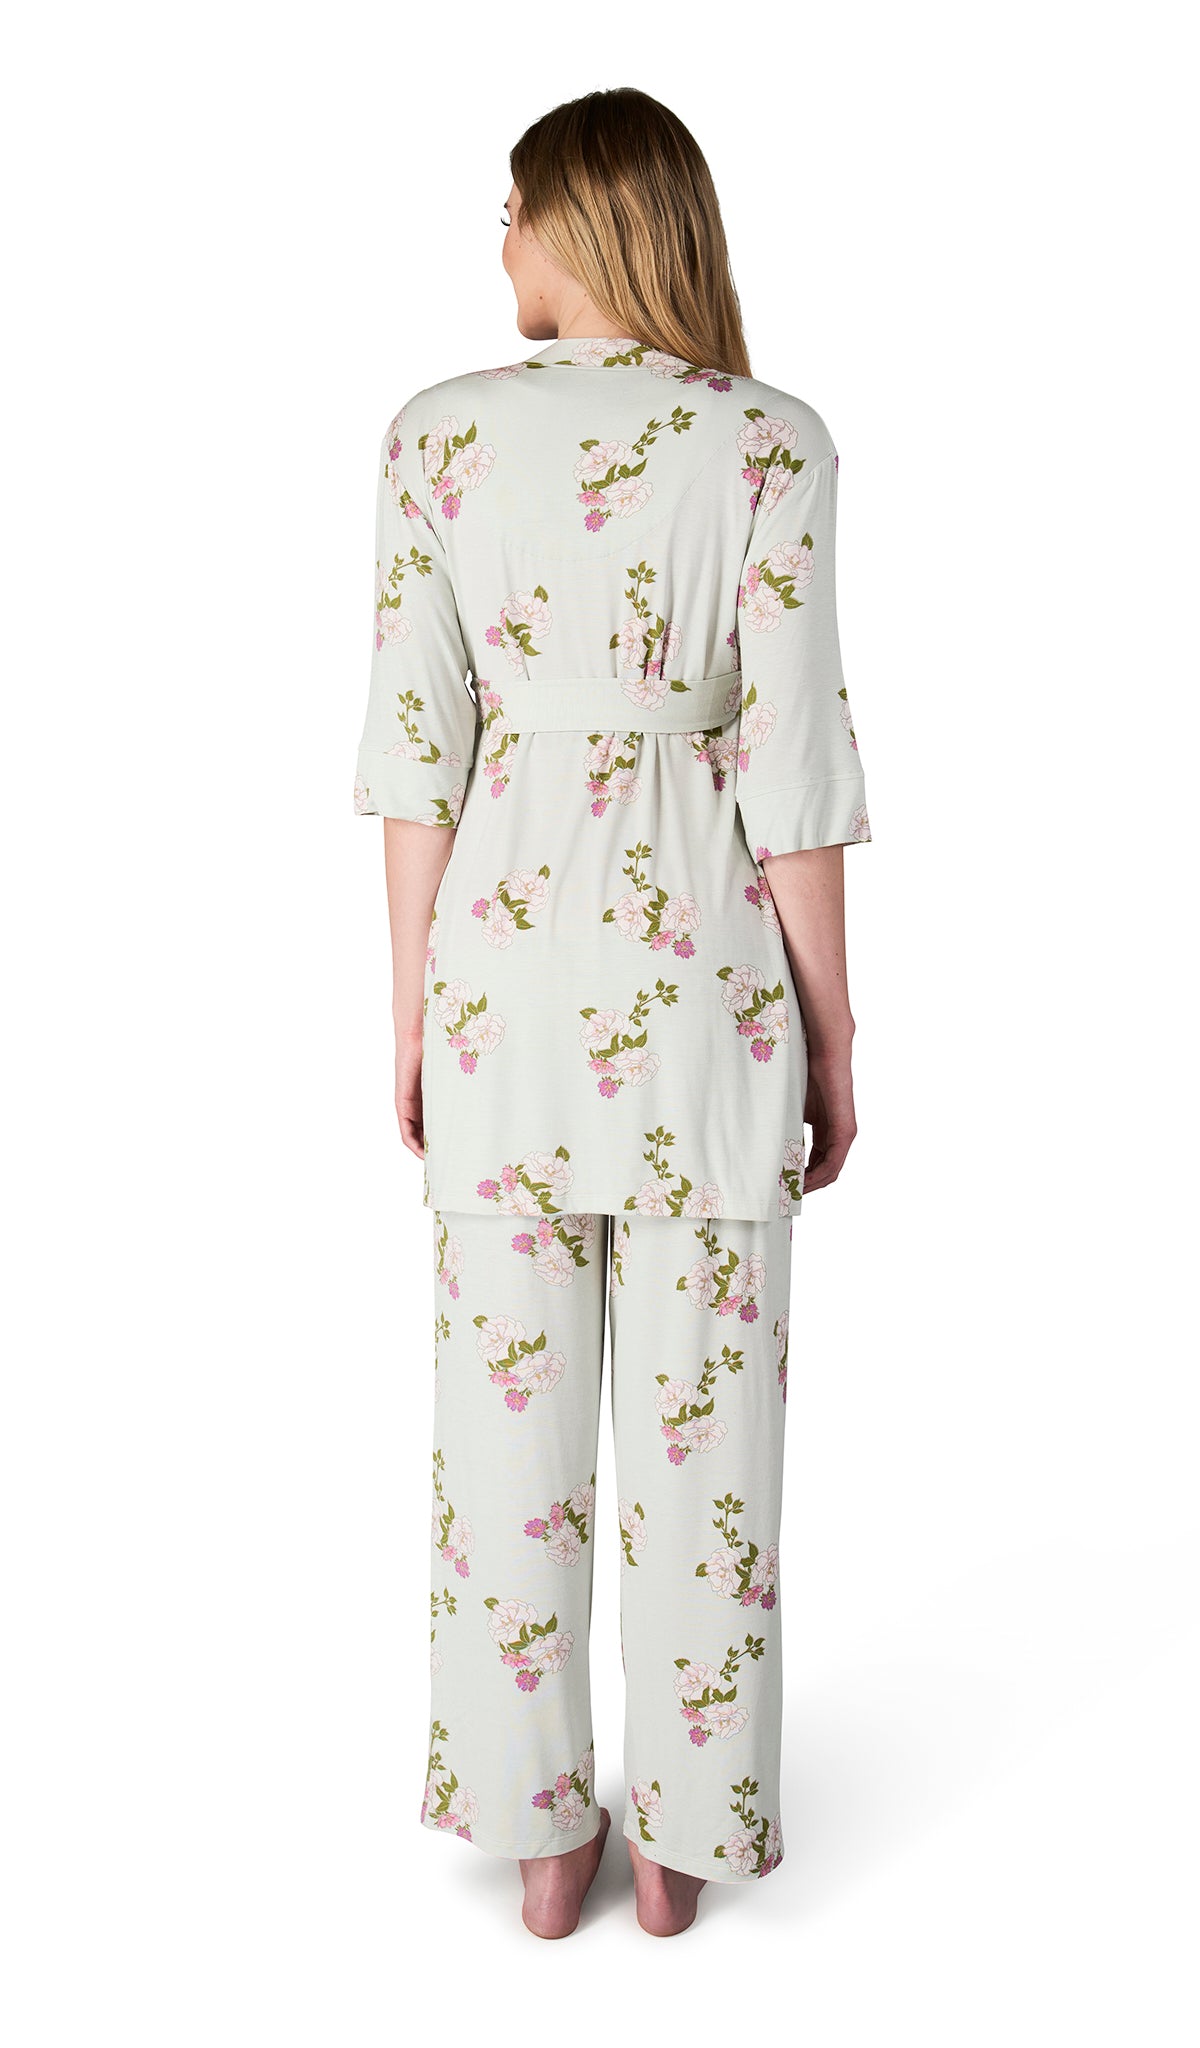 Everly Grey Analise During &After Maternity Nursing Sleepwear 5-Piece  Pajama Set